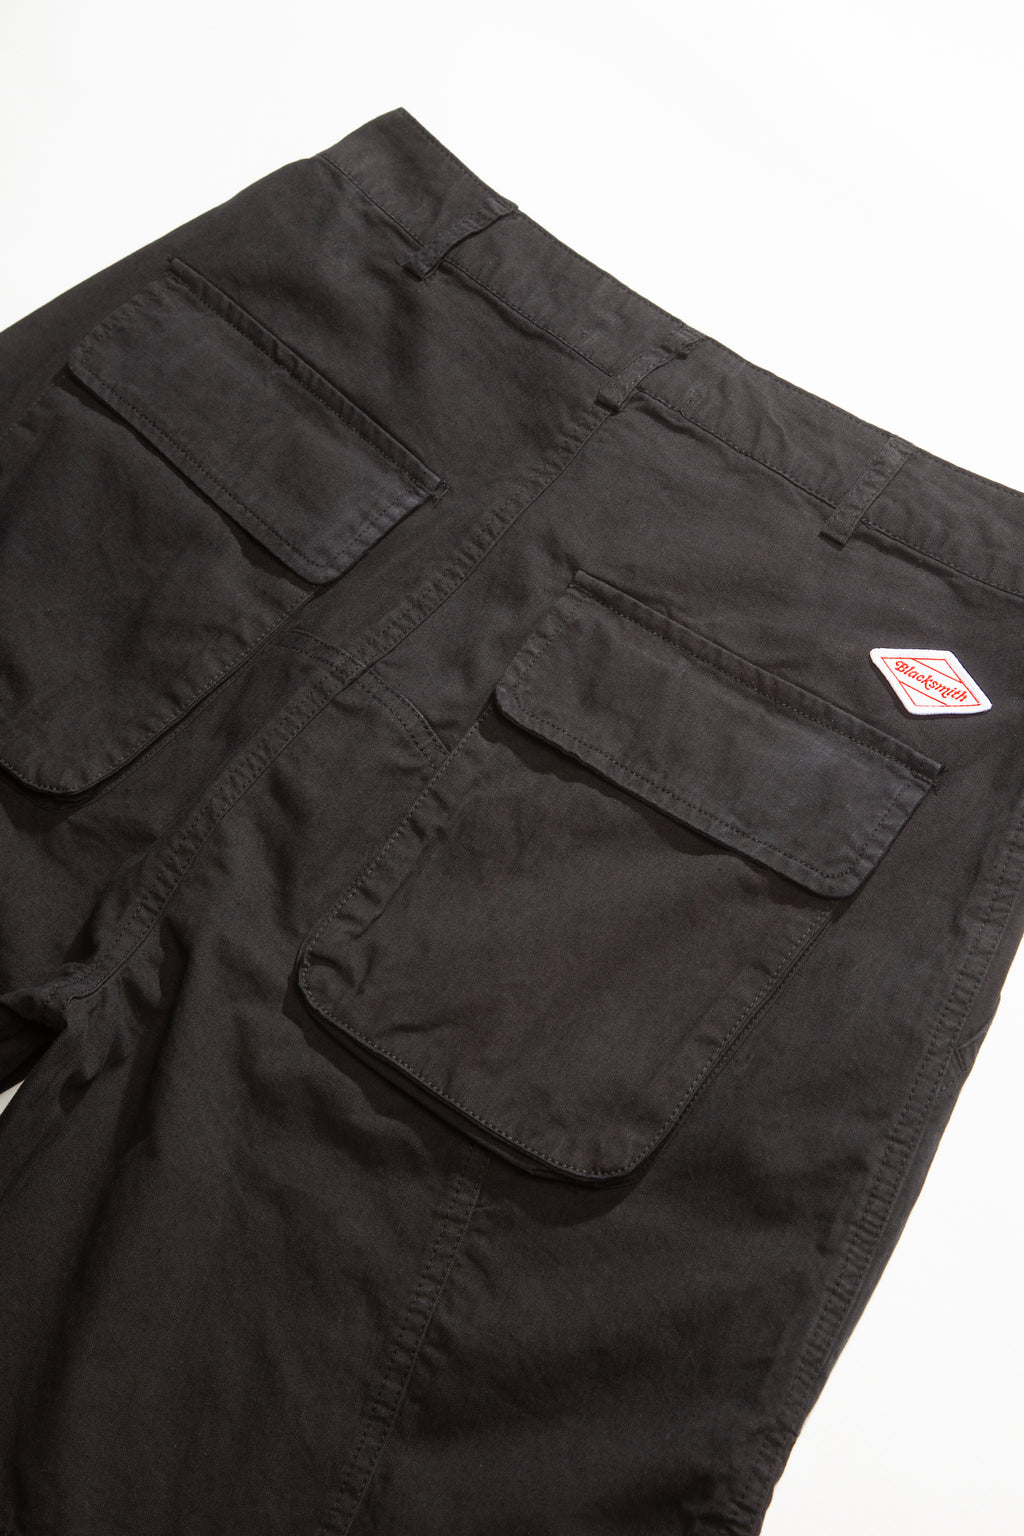 Blacksmith - Sateen Fatigue Shorts - Black